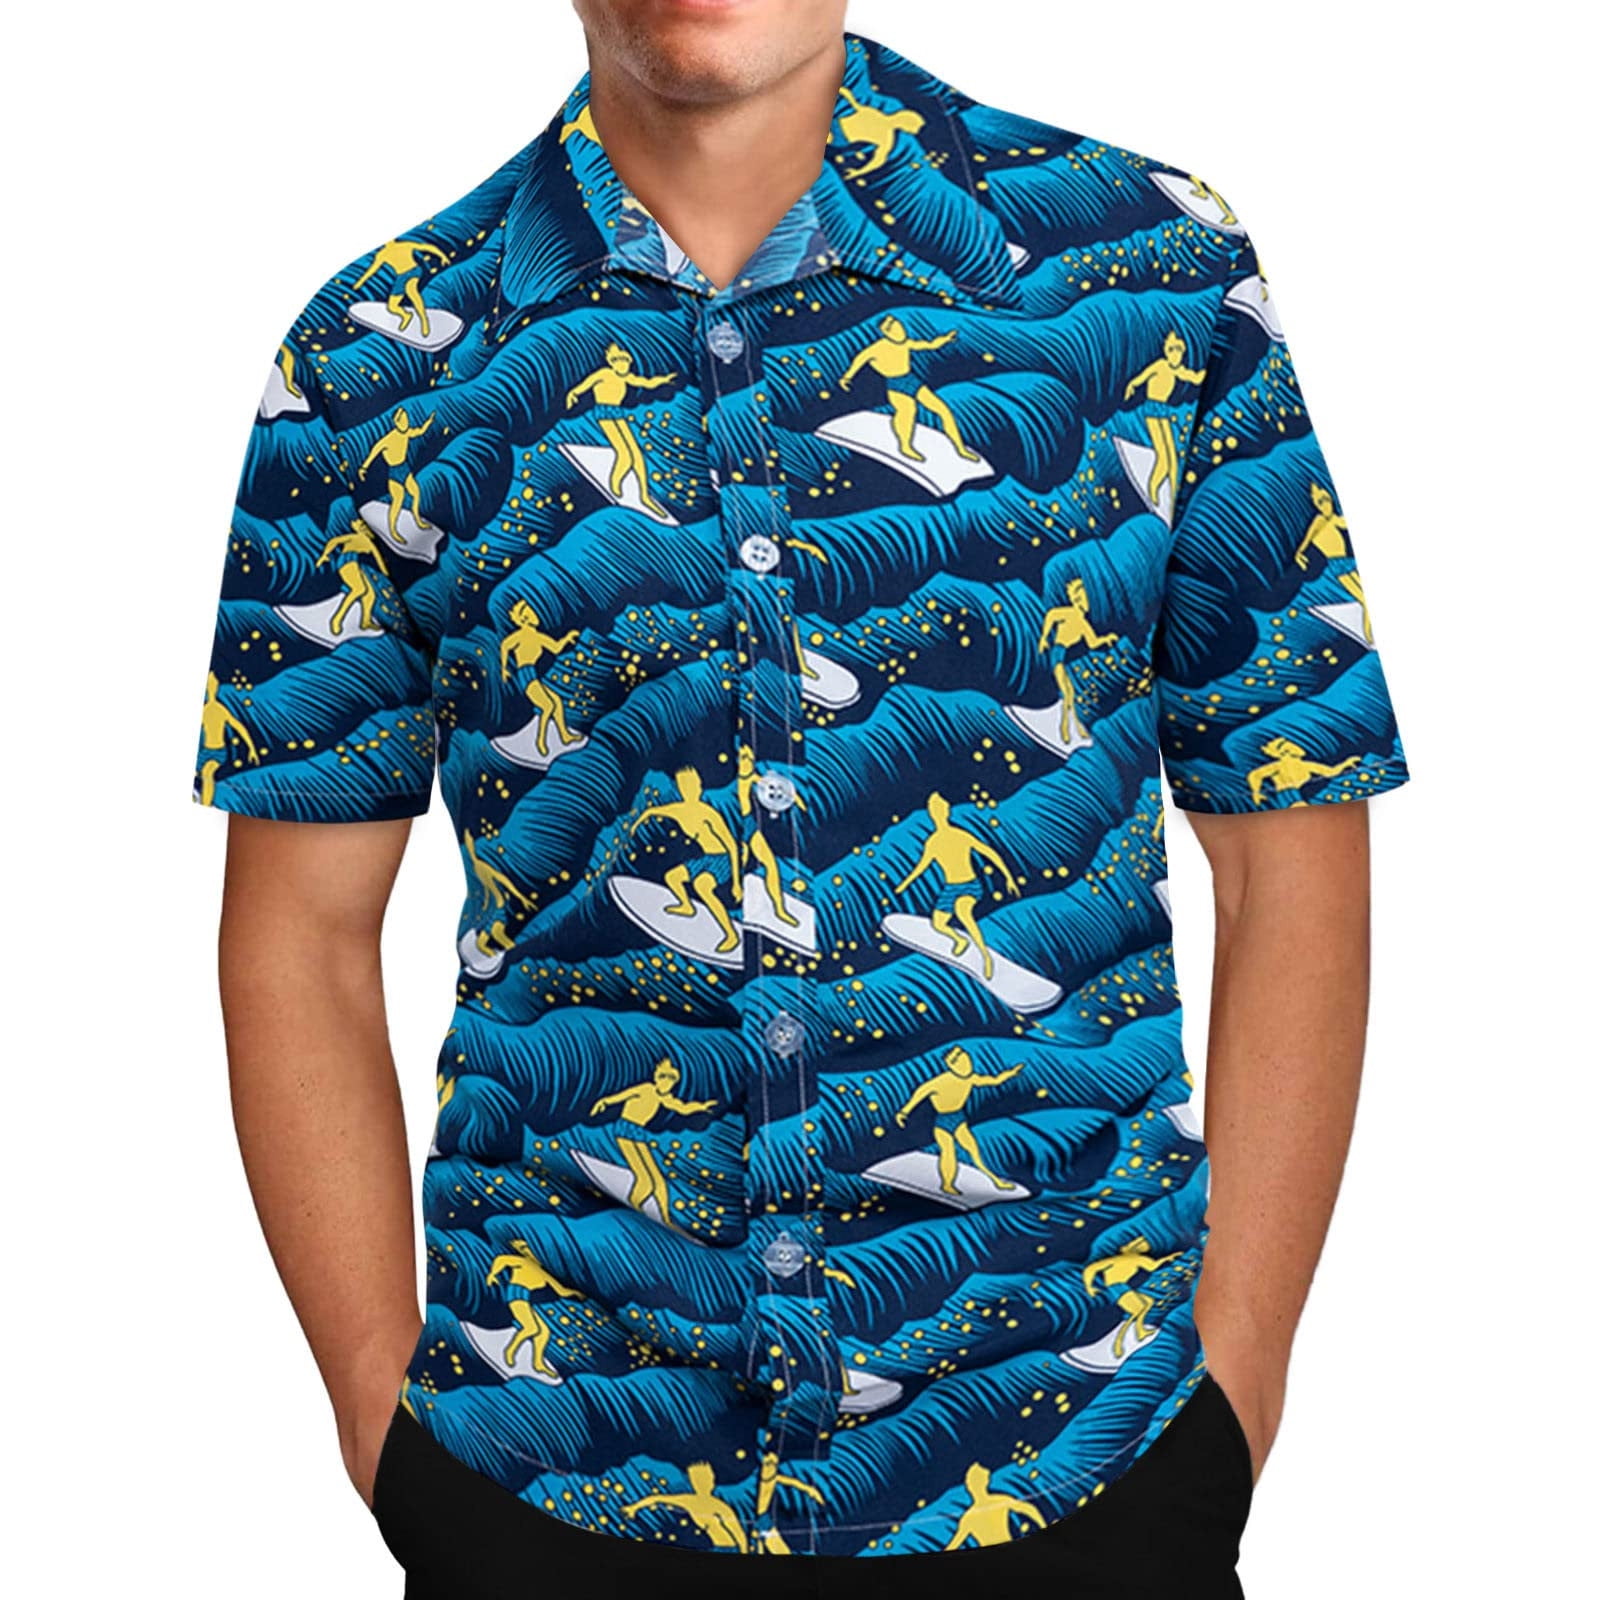 Mens Hawaiian Printing Short Sleeve Buttons Down T-Shirt Sports Beach Top Shirts 